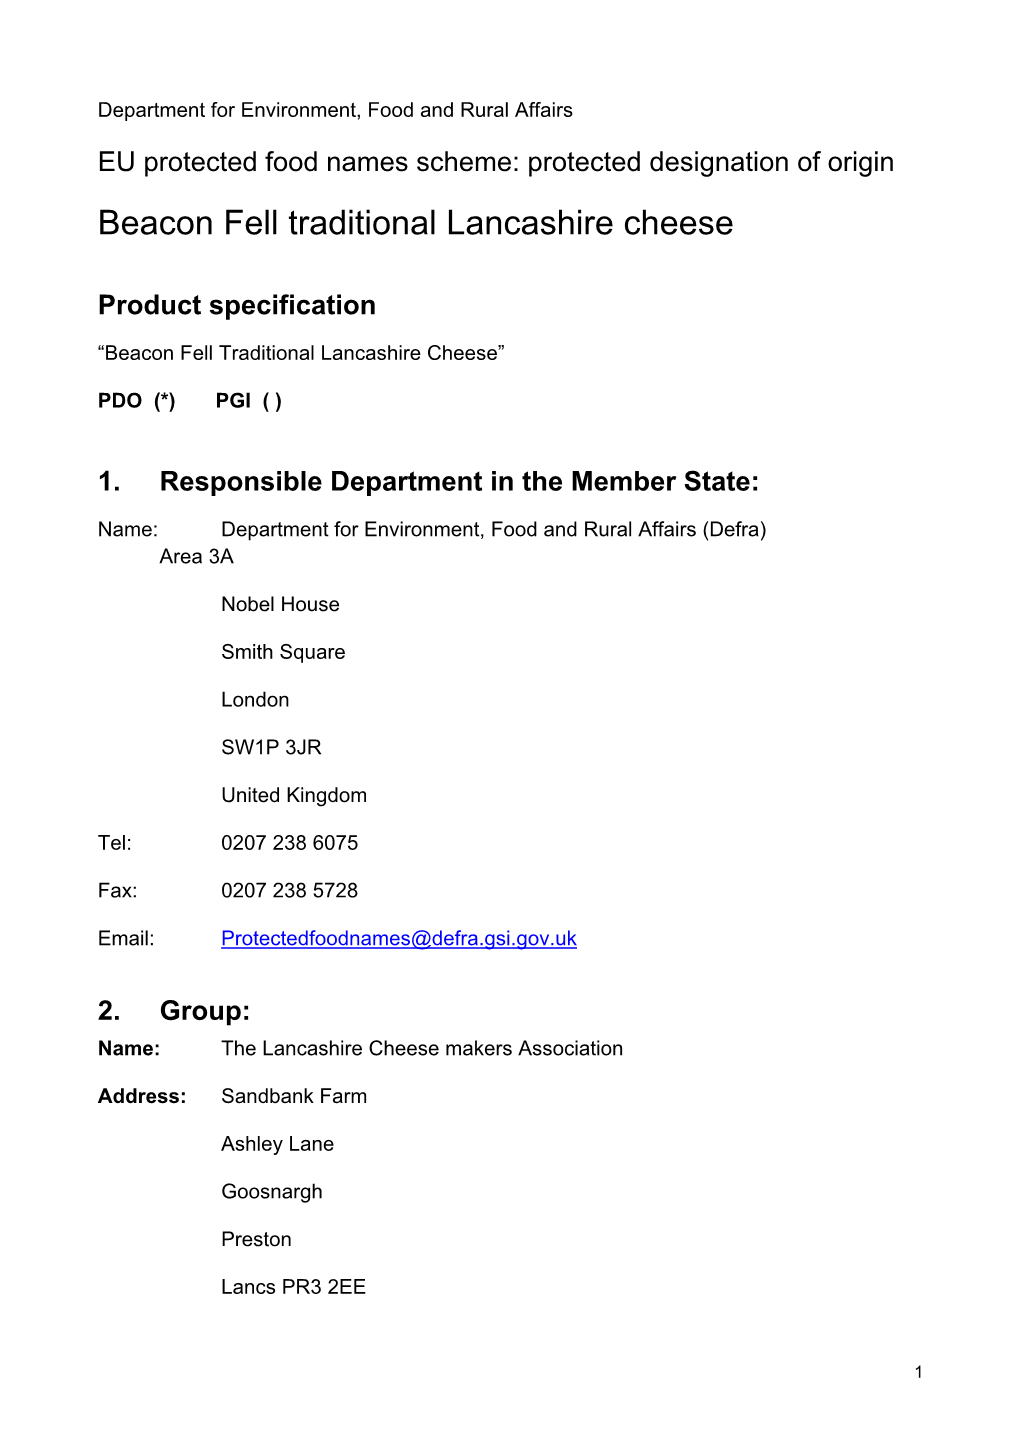 Beacon Fell Traditional Lancashire Cheese